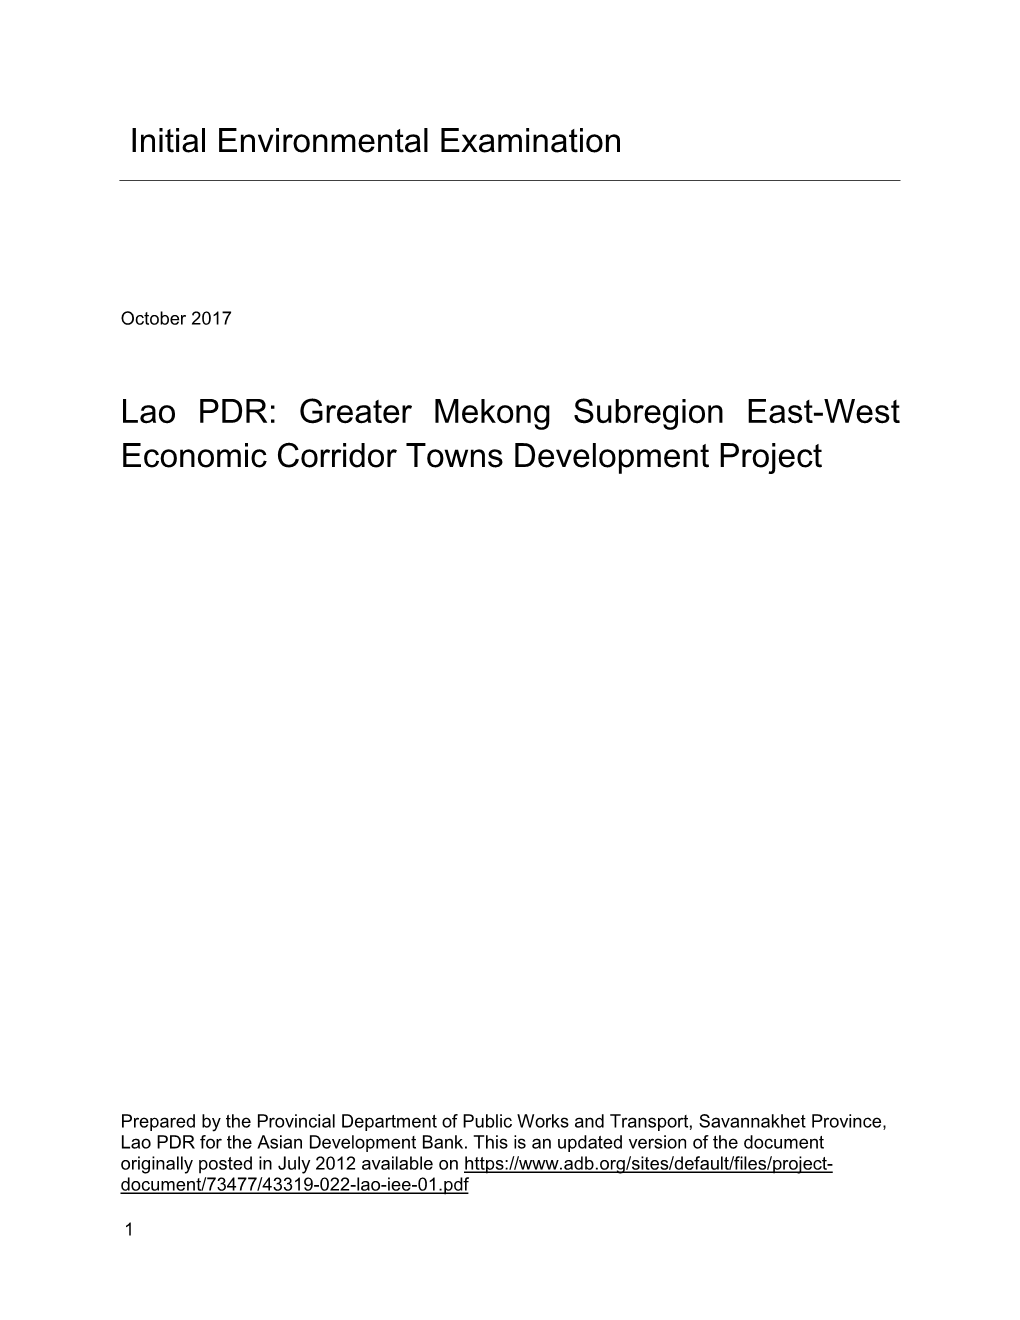 Greater Mekong Subregion East-West Economic Corridor Towns Development Project: Kaysone Phomvihane, Phine, and Dansavanh Initial